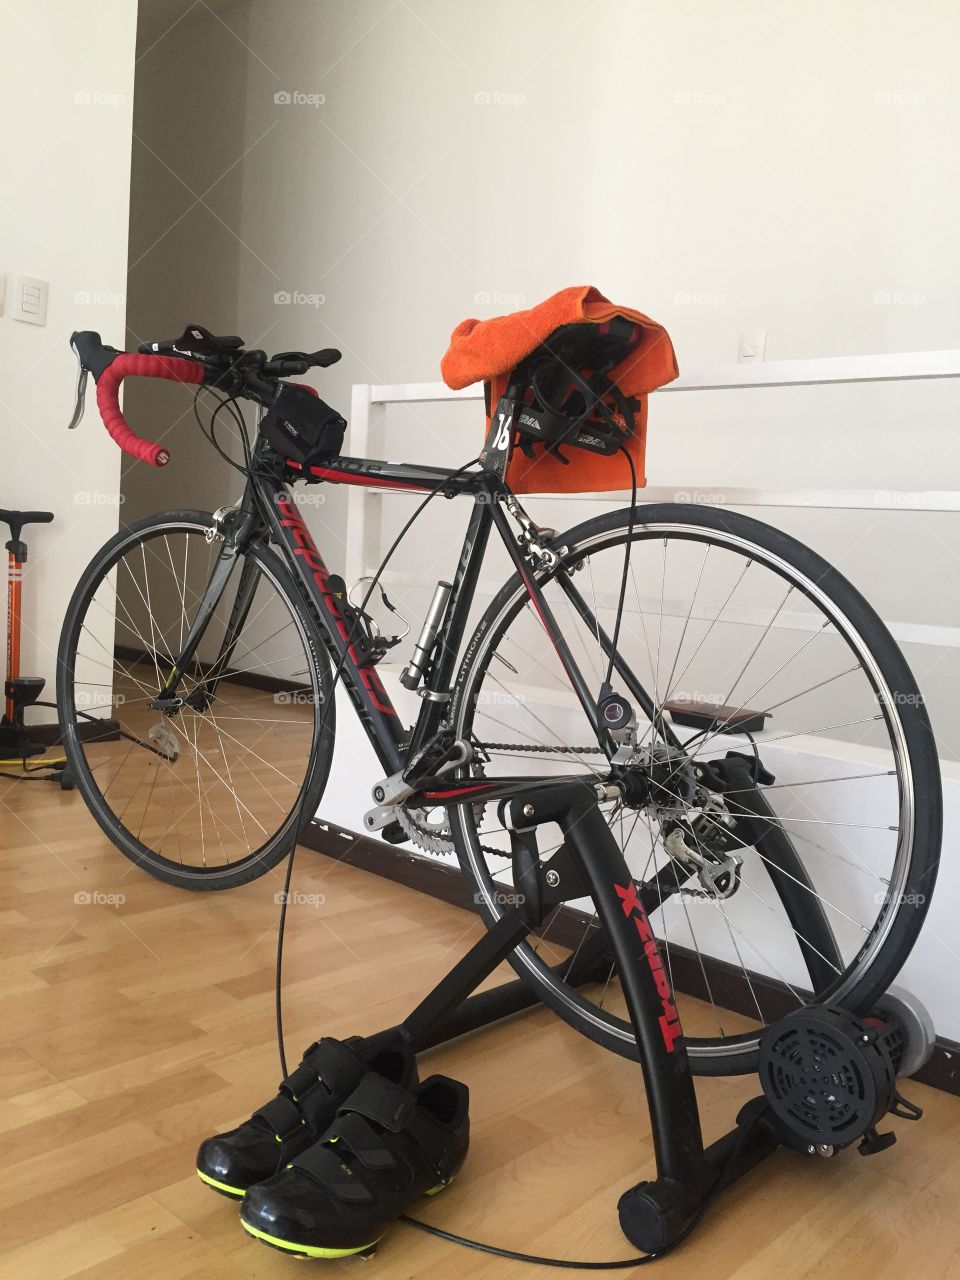 Bicycle indoor training bike